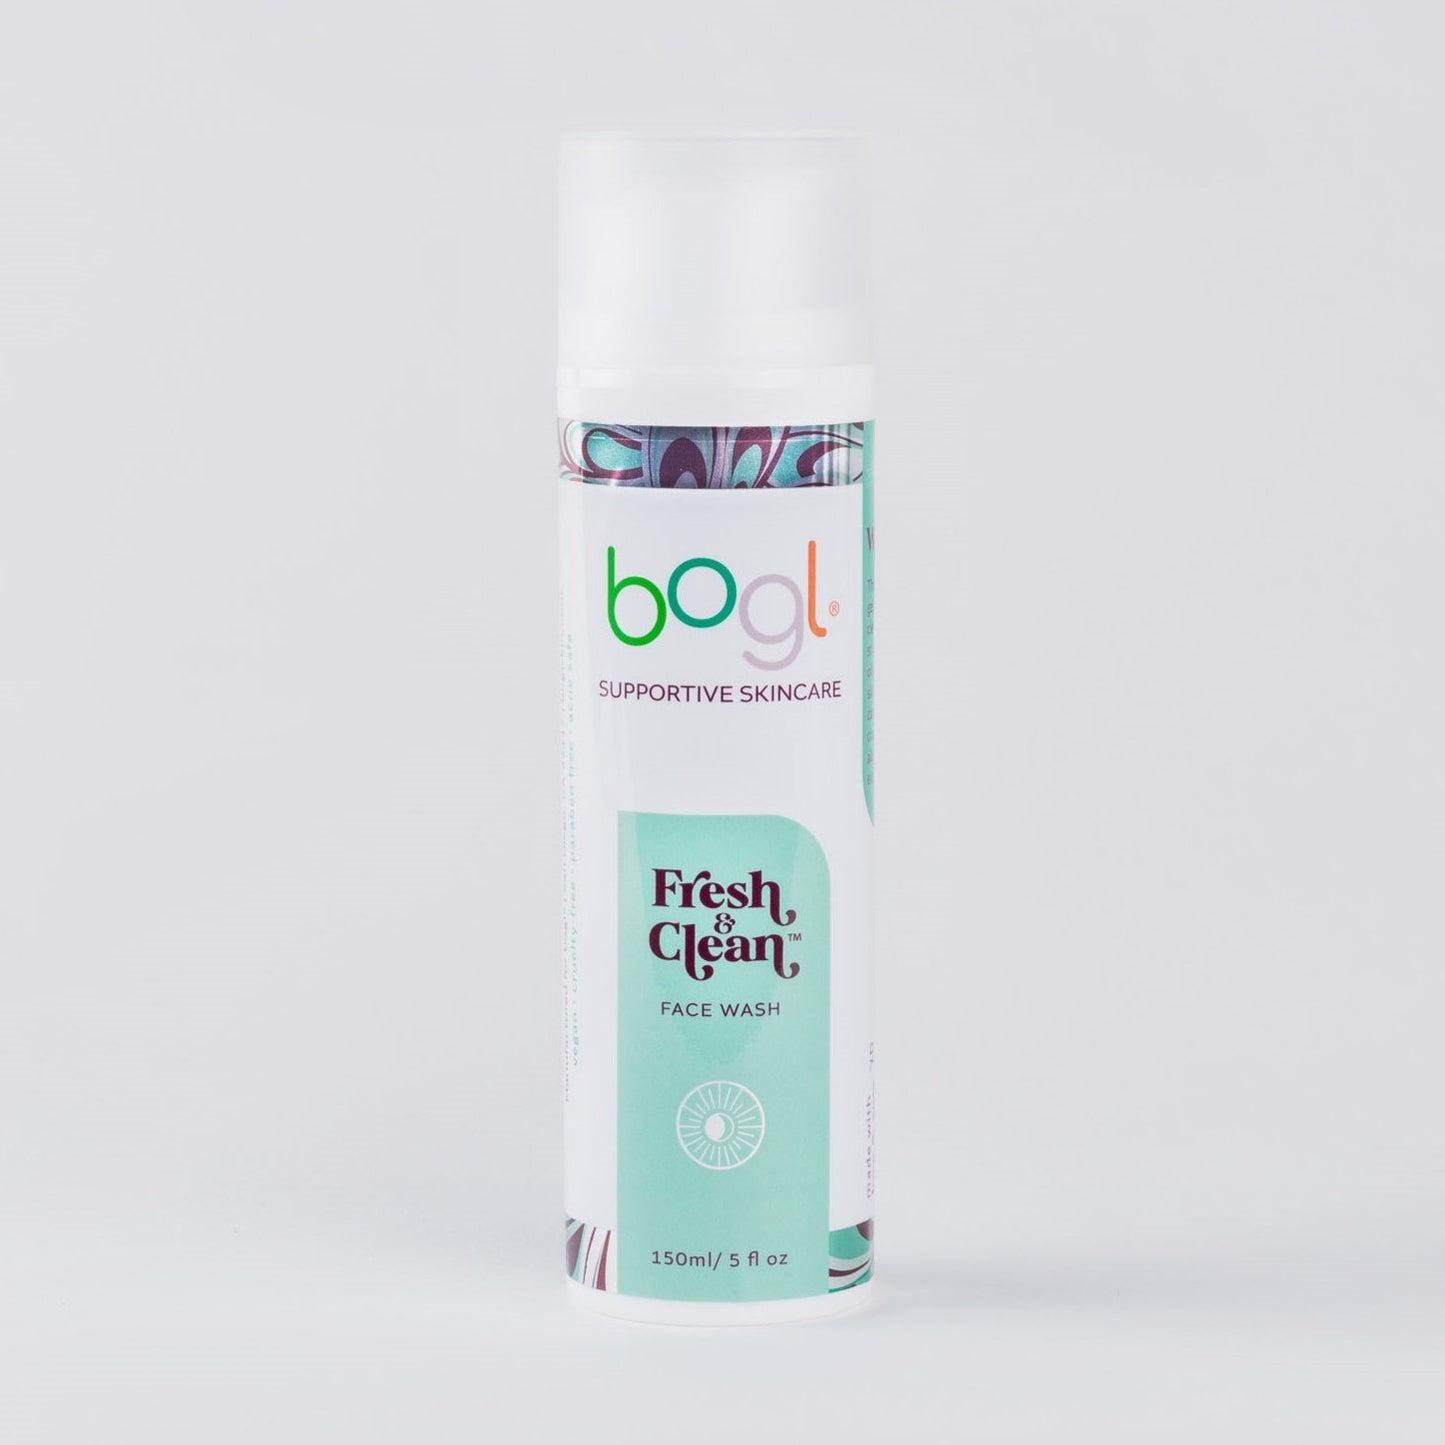 bogl's fresh + clean gel cleanser in 5 oz bottle for normal to oily skin